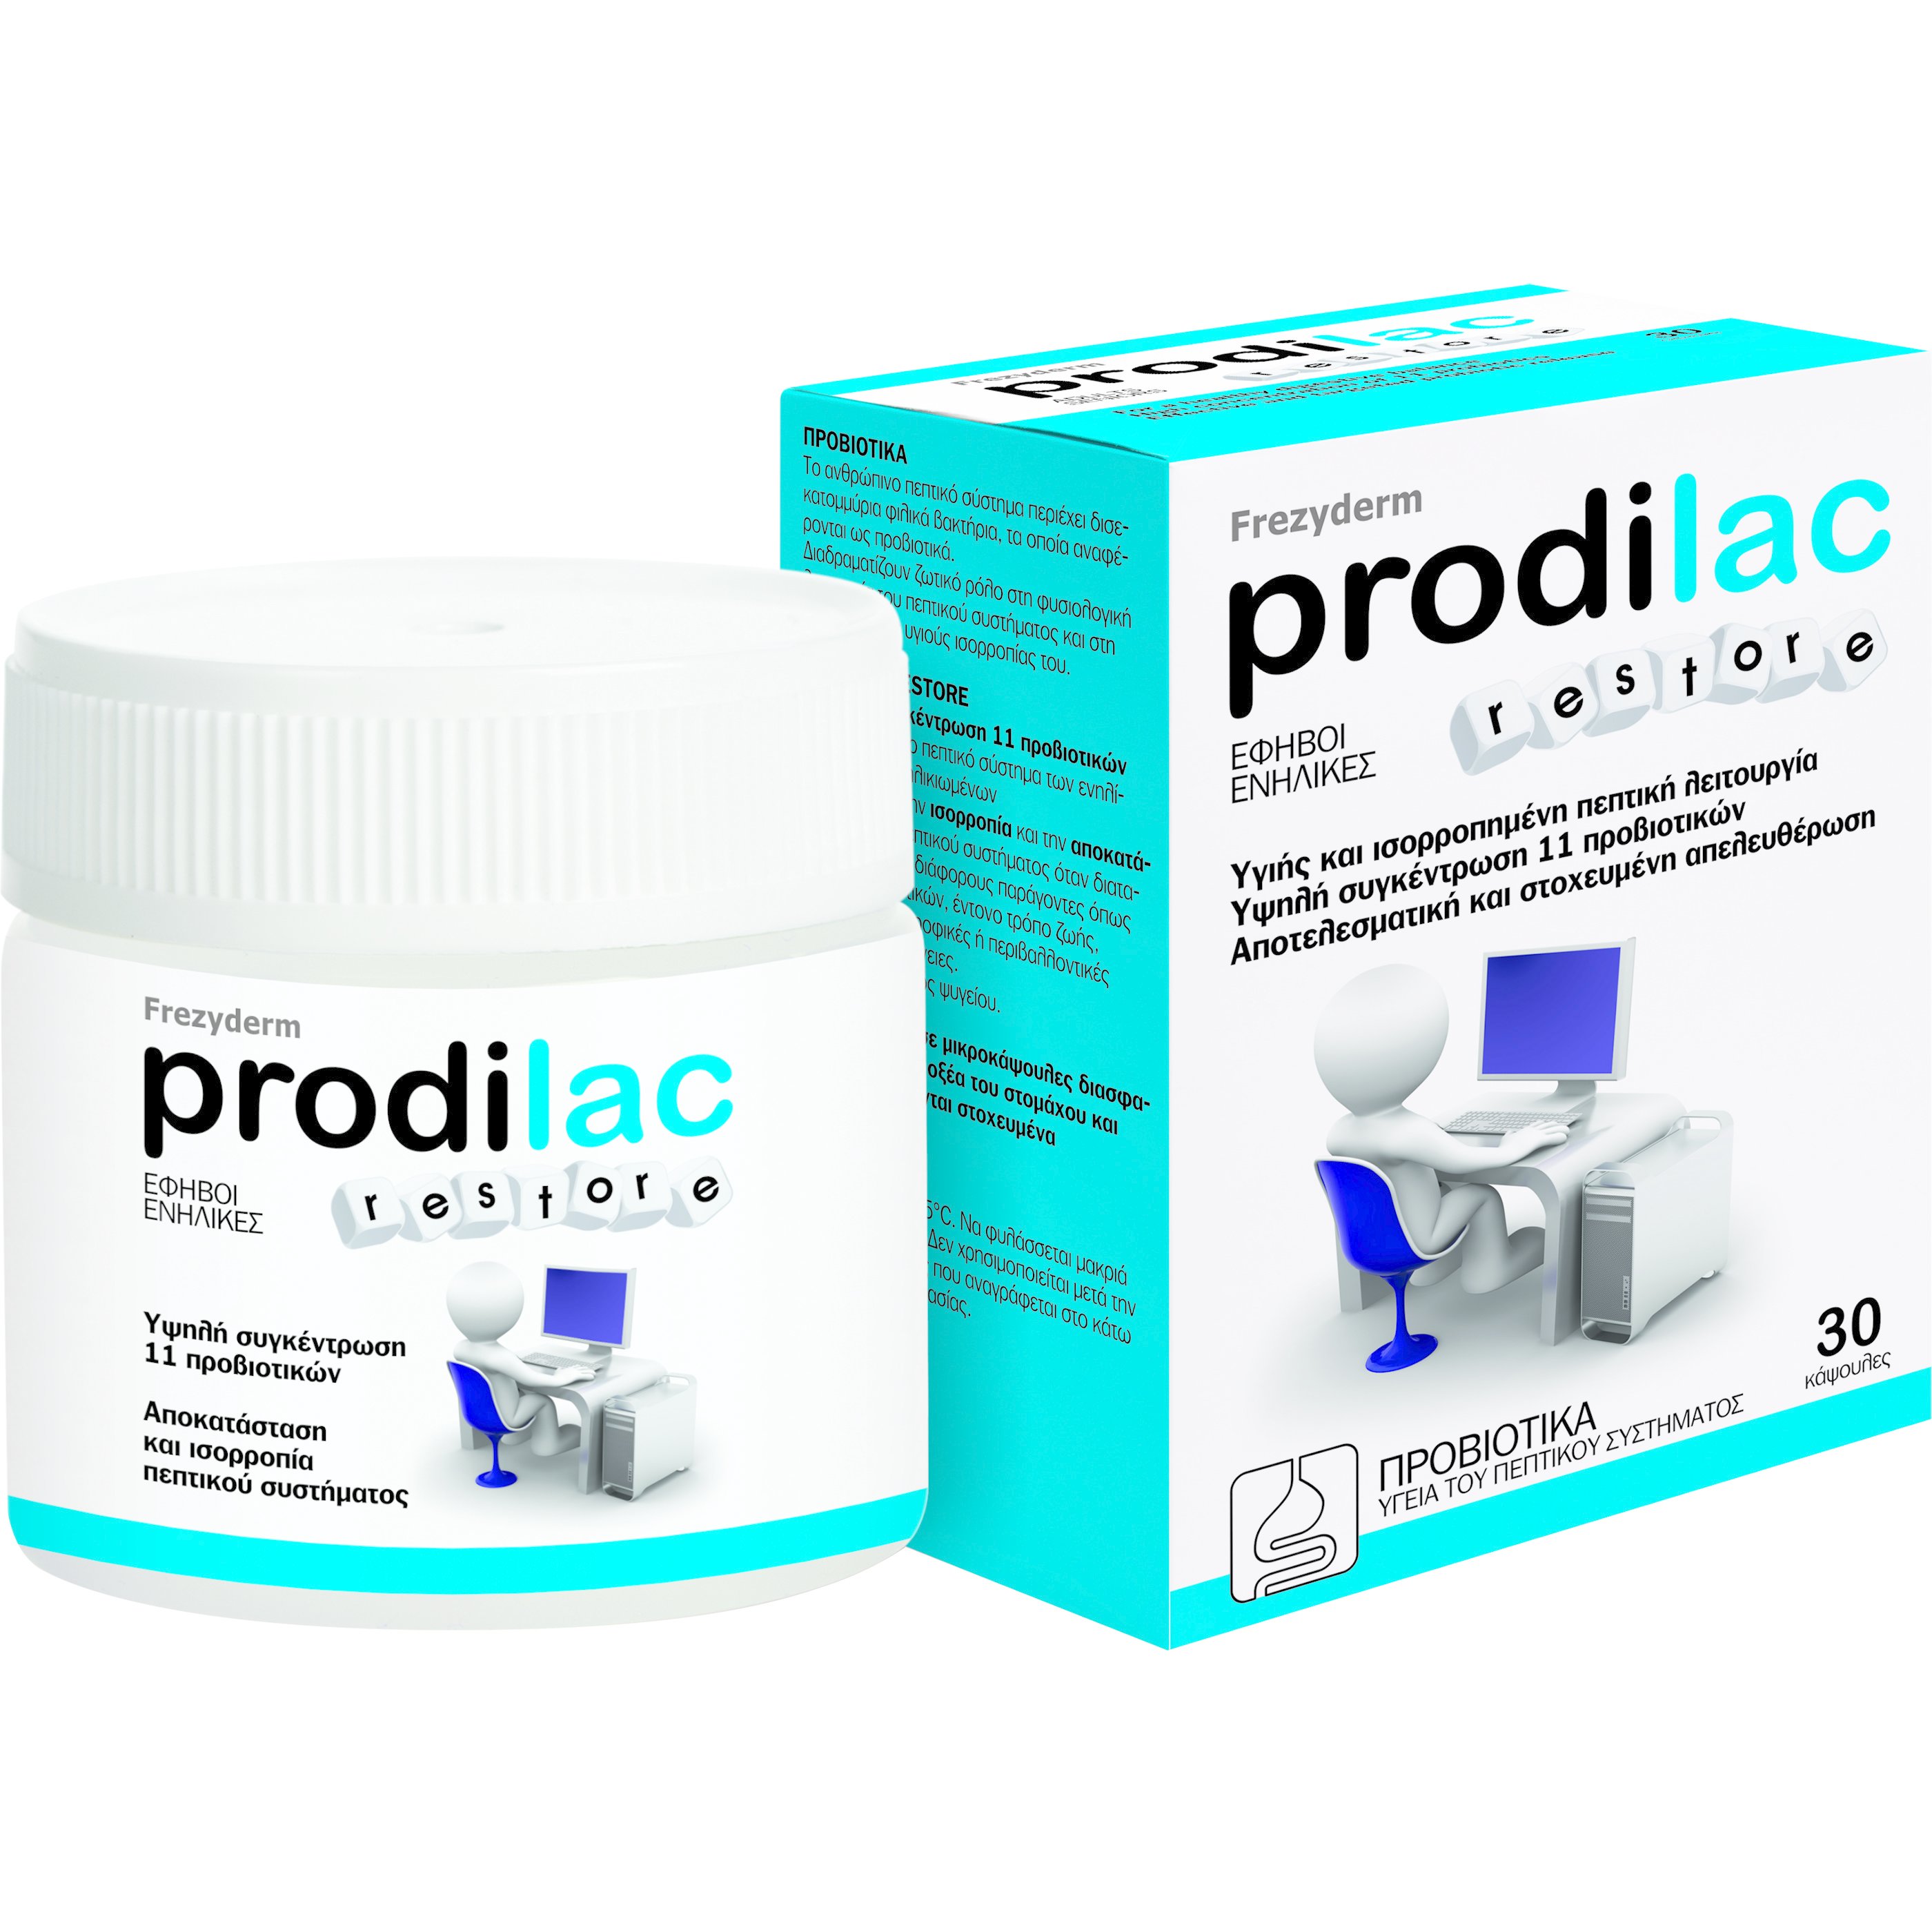 Frezyderm Prodilac Restore 30 Εντεροδιαλυτές Προβιοτικών για Έφηβους & Ενήλικες 16-50 Ετών 30caps